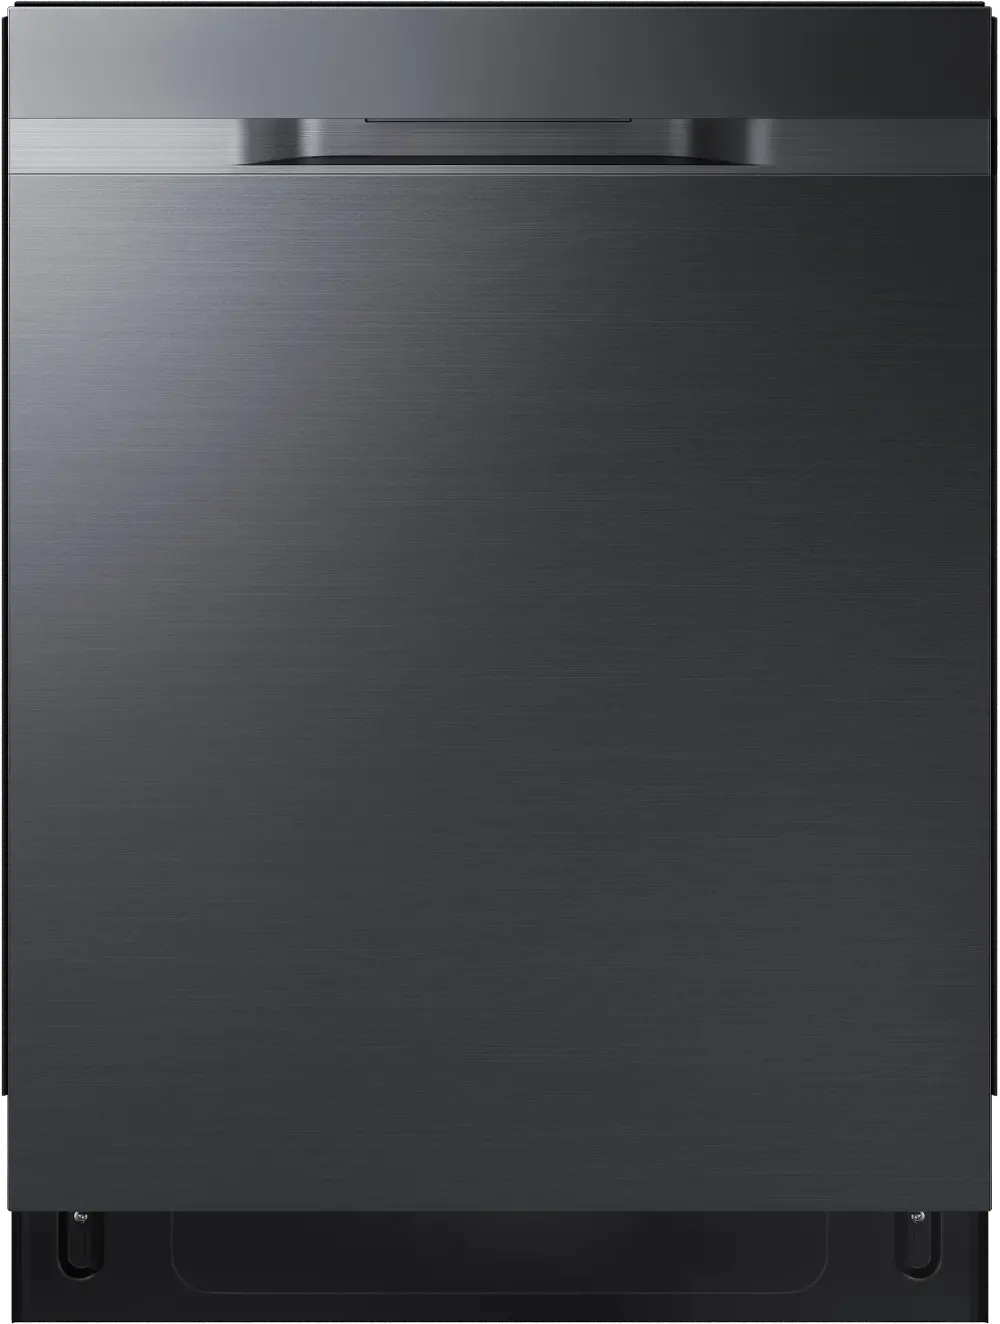 DW80R5060UG Samsung Top Control Dishwasher - Black Stainless Steel-1